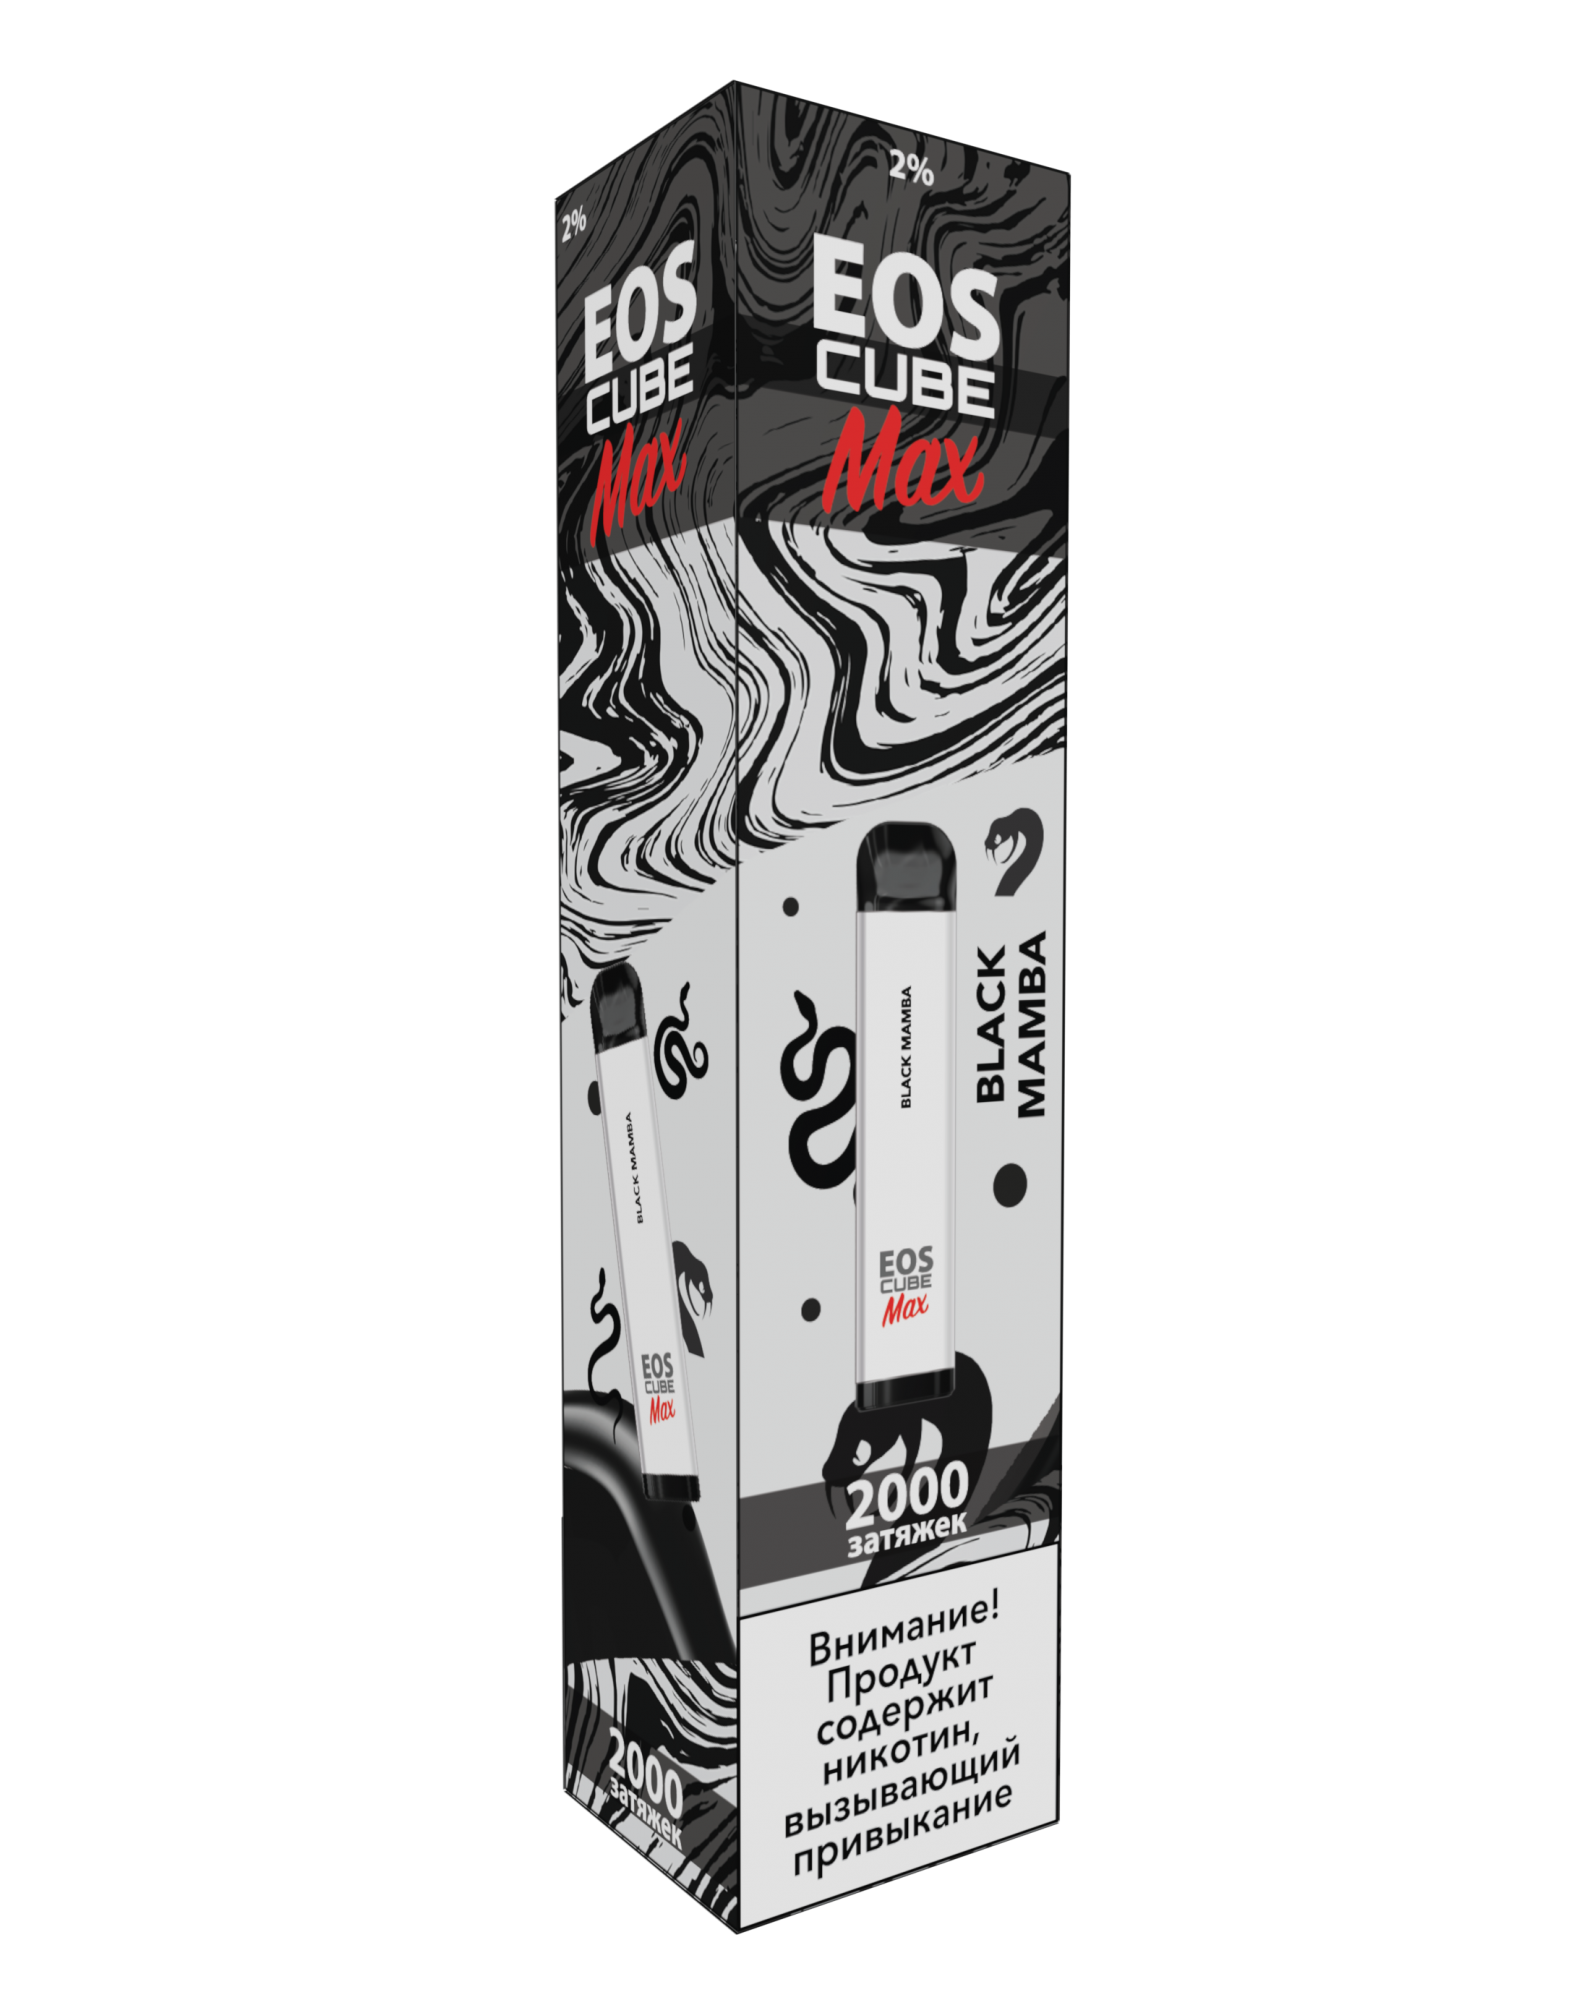 Max cubes. EOS электронная сигарета. EOS Cube. Одноразовые электронные сигареты. Black Mamba электронная сигарета.